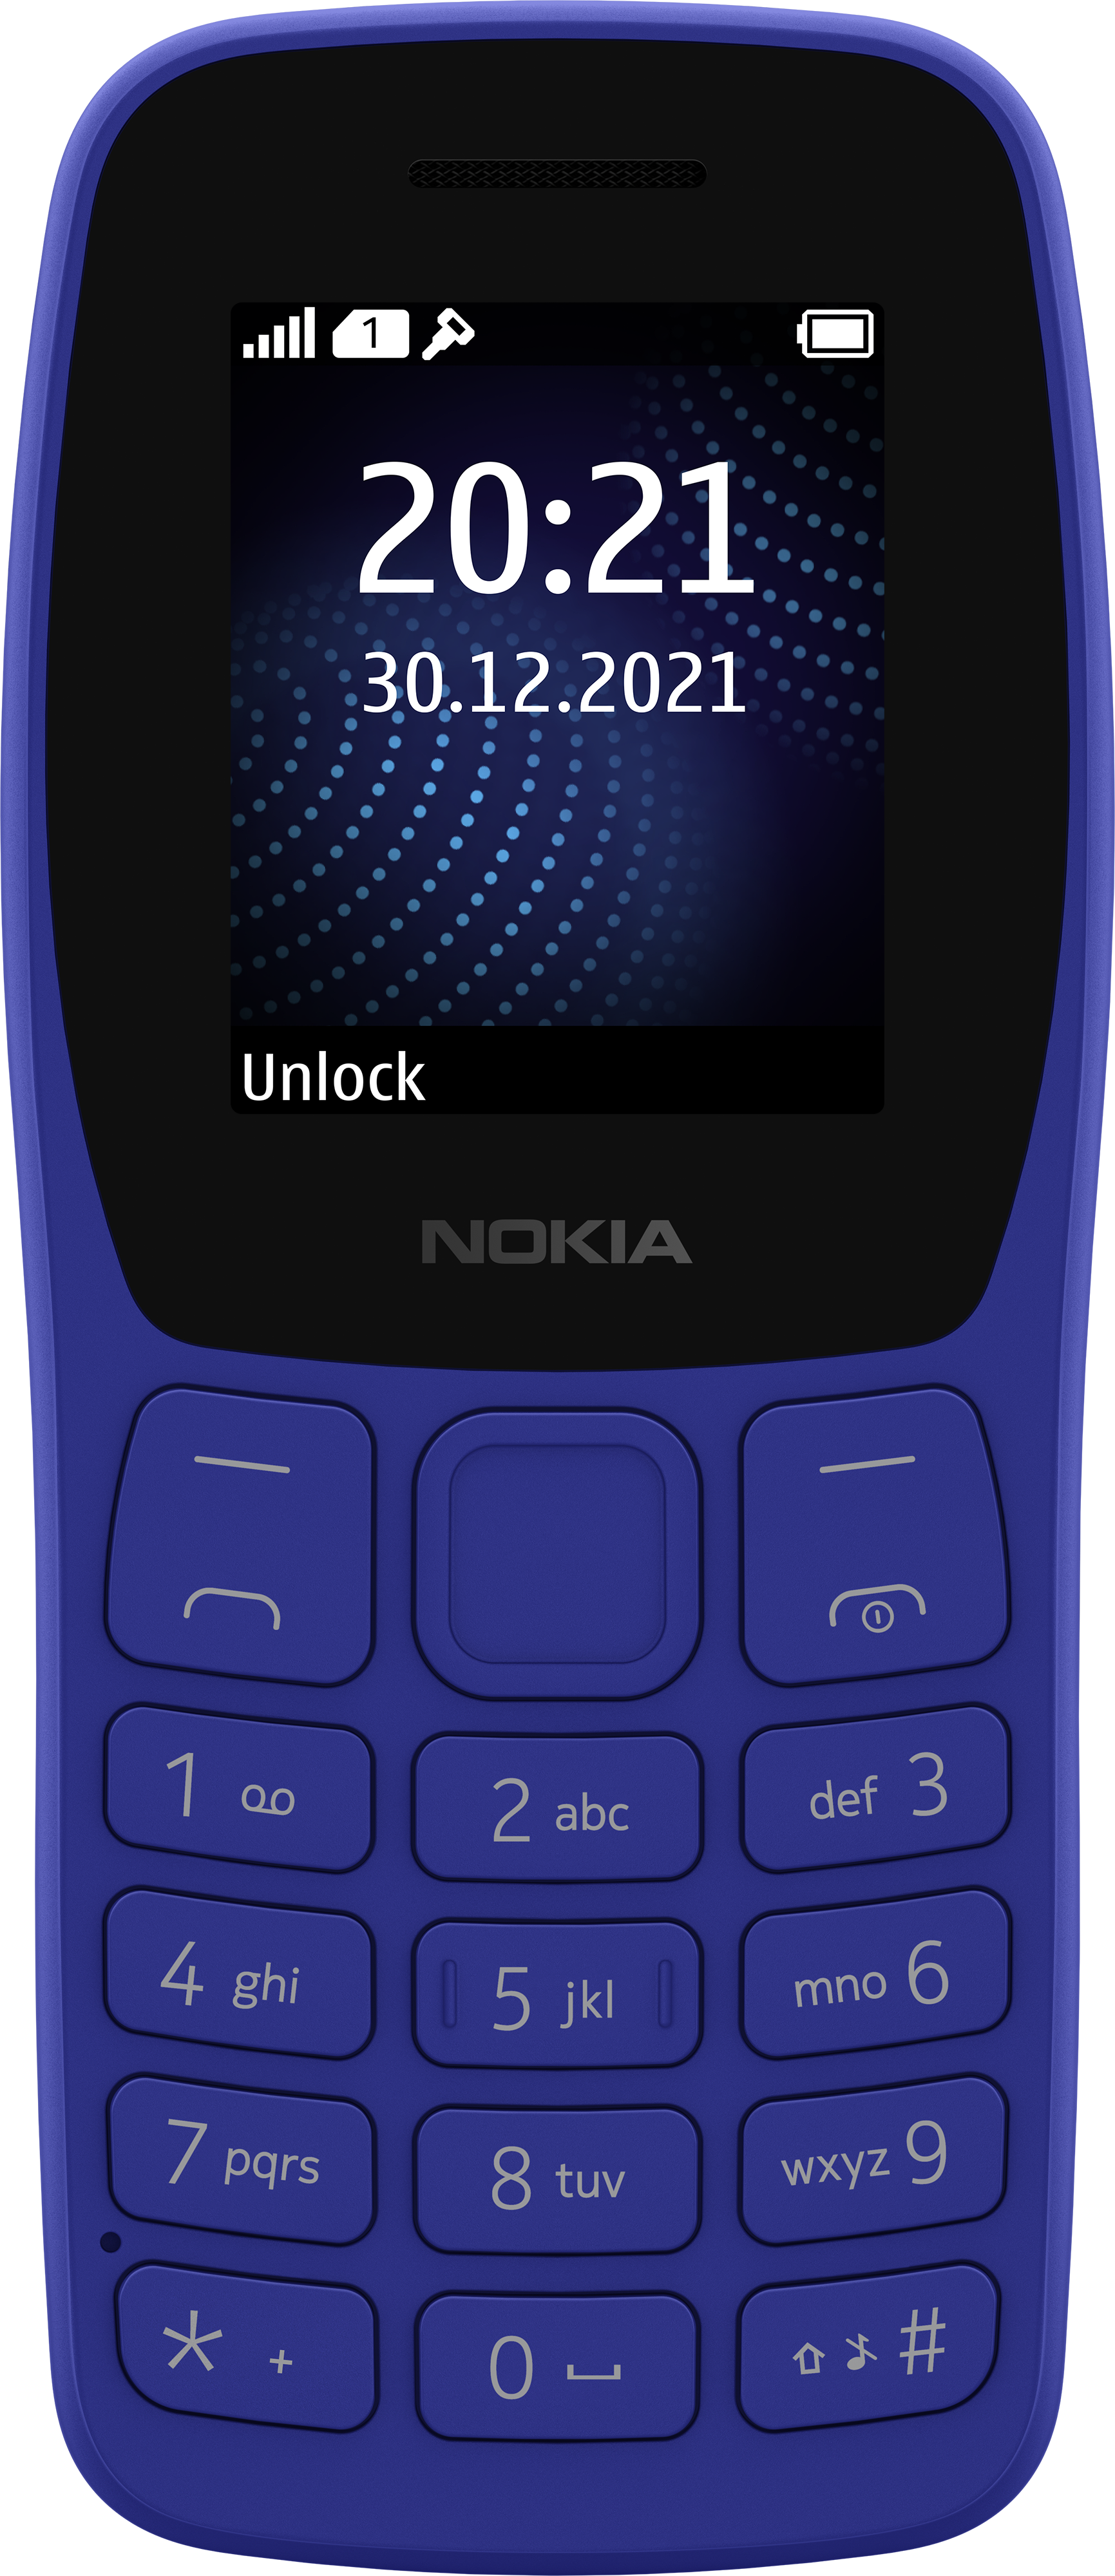 Nokia 105 feature mobile phone